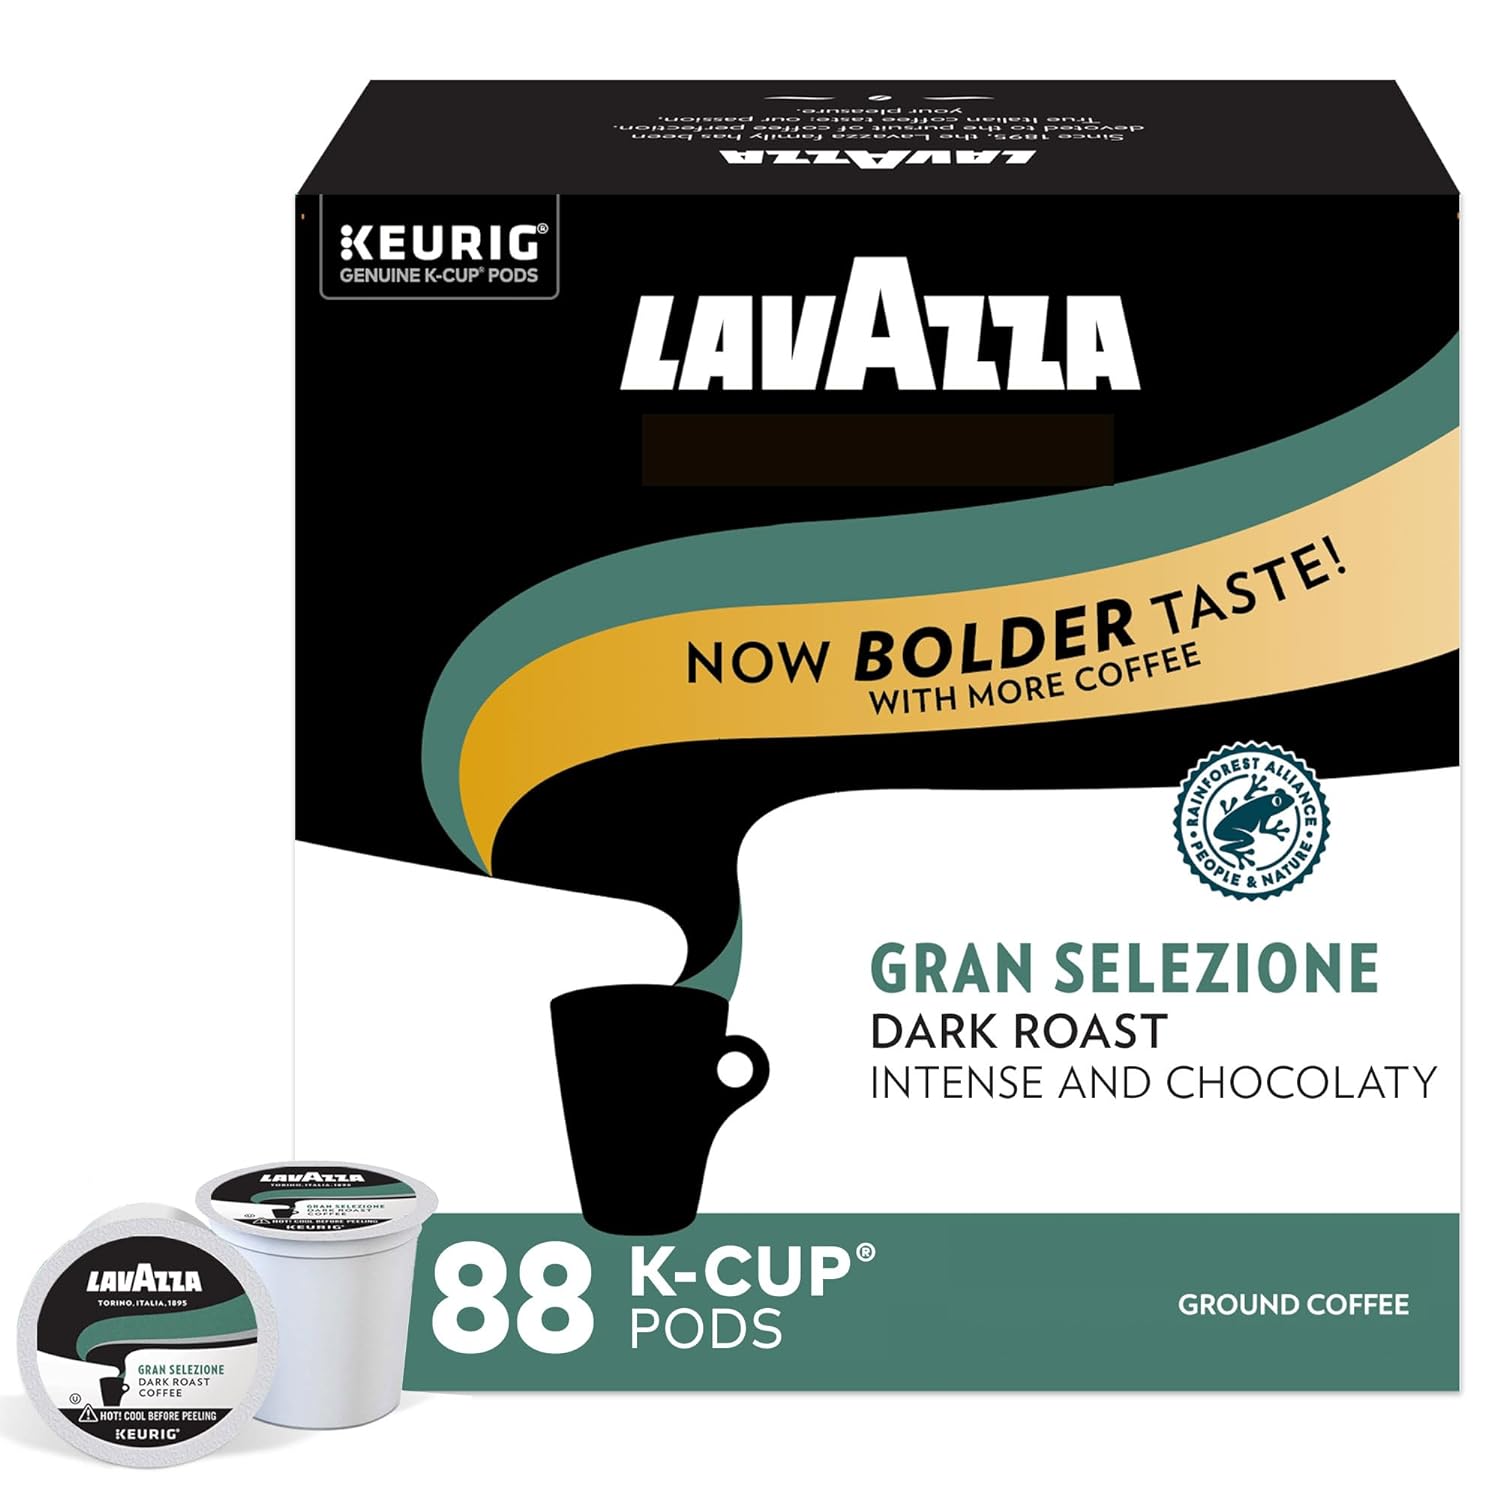 Lavazza Gran Selezione Single-Serve Coffee K-Cups for Keurig Brewer, Dark Roast, 88 capsules Value Pack, 100% Arabica